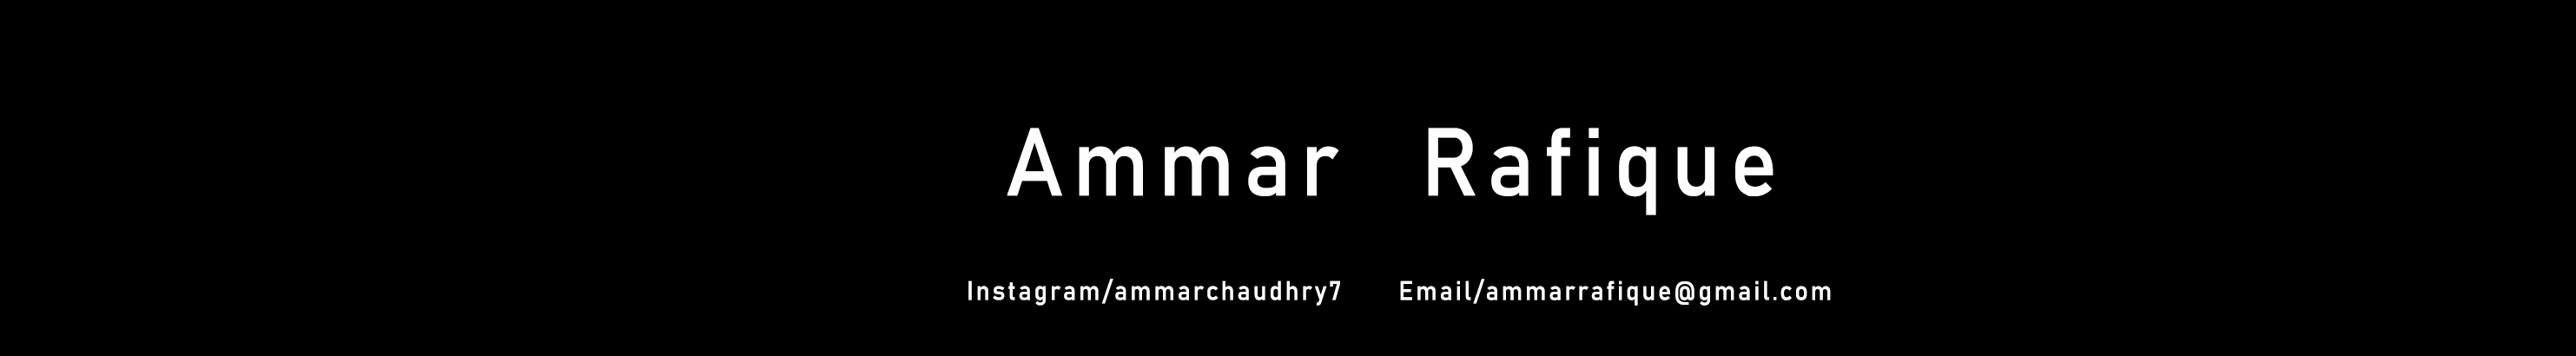 Ammar Rafique's profile banner